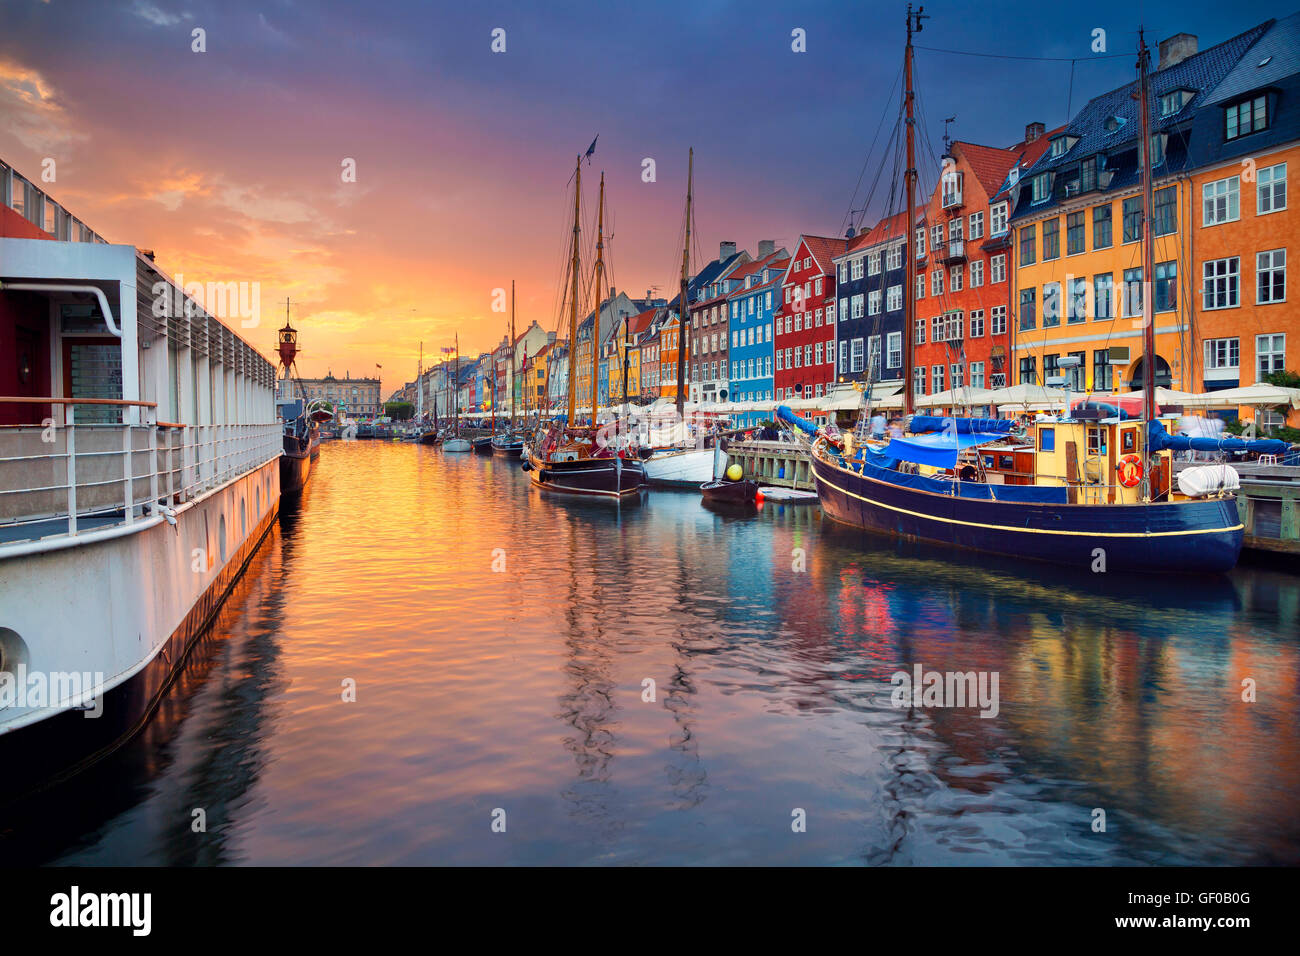 Canal de Nyhavn, Copenhague. imagen del canal de Nyhavn en Copenhague, Dinamarca, durante el hermoso atardecer. Foto de stock